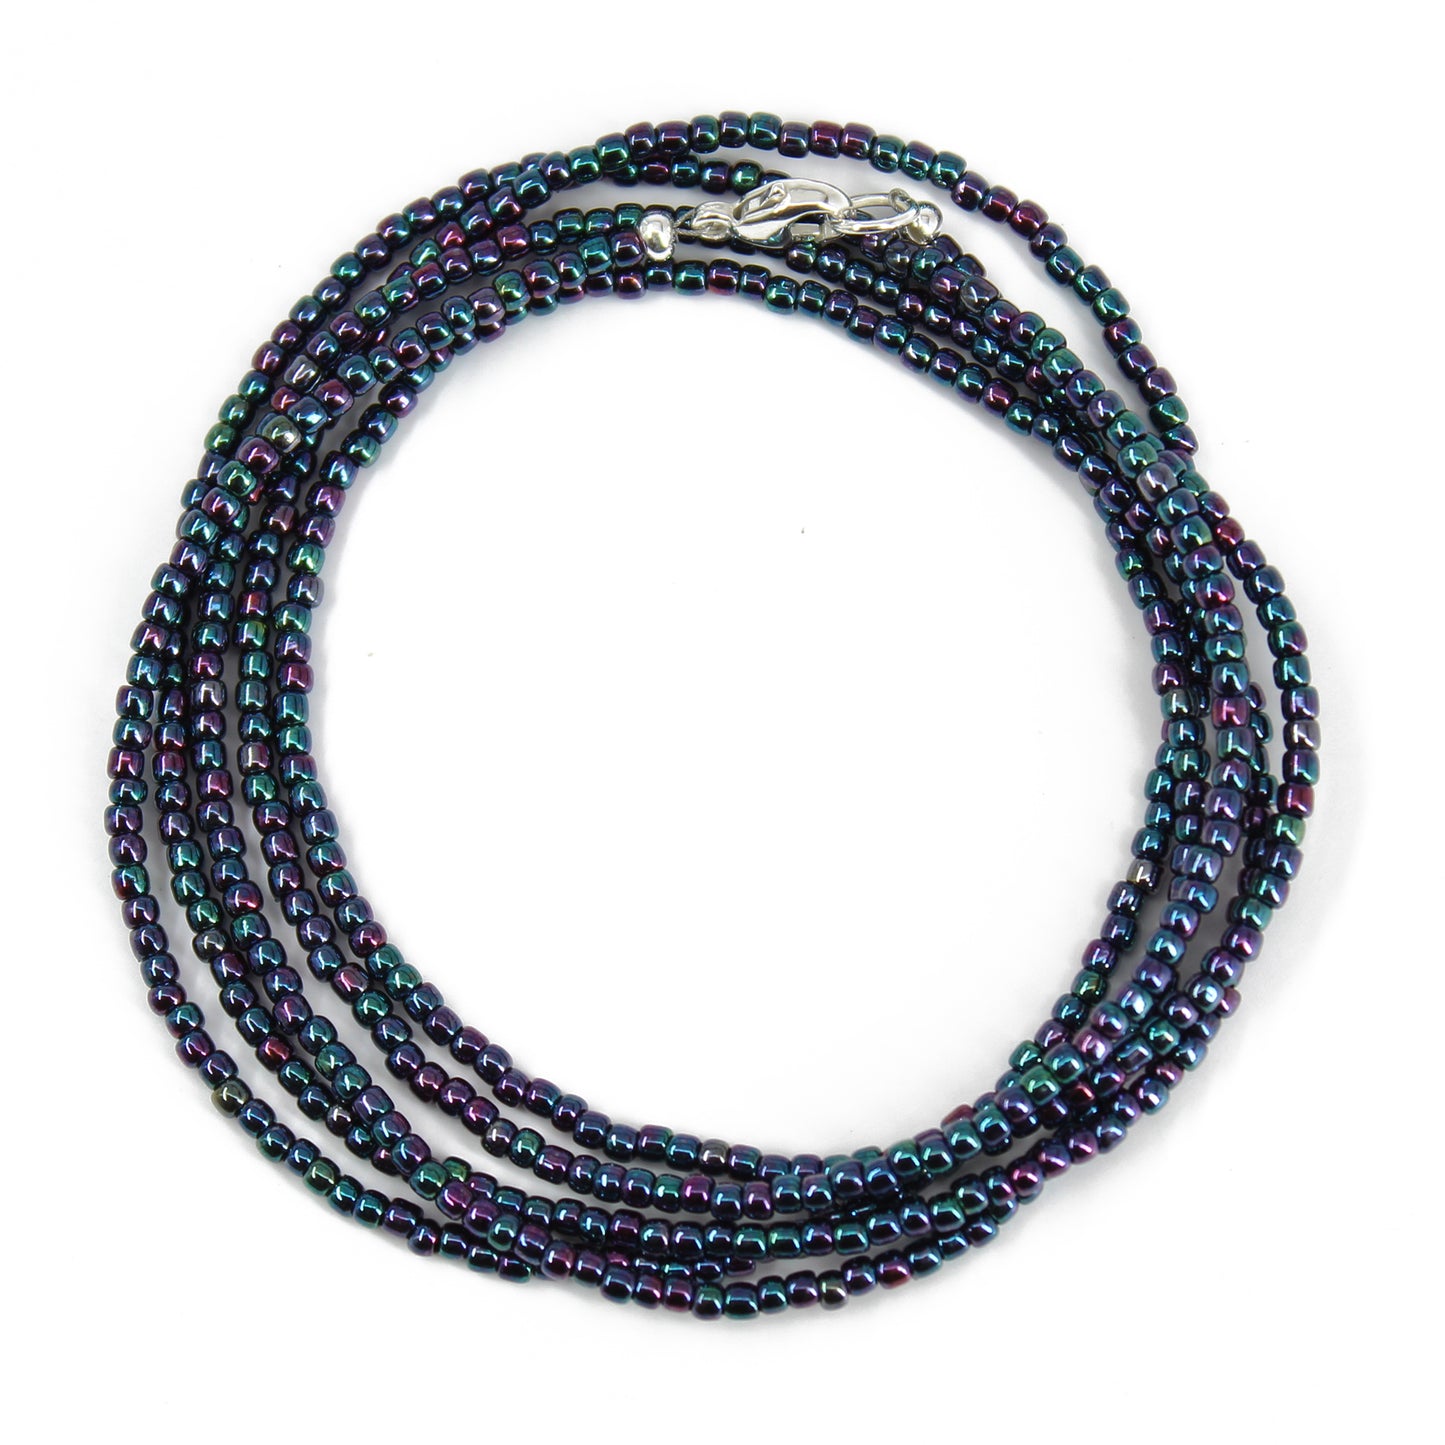 Metallic Blue Purple Iris Seed Bead Necklace